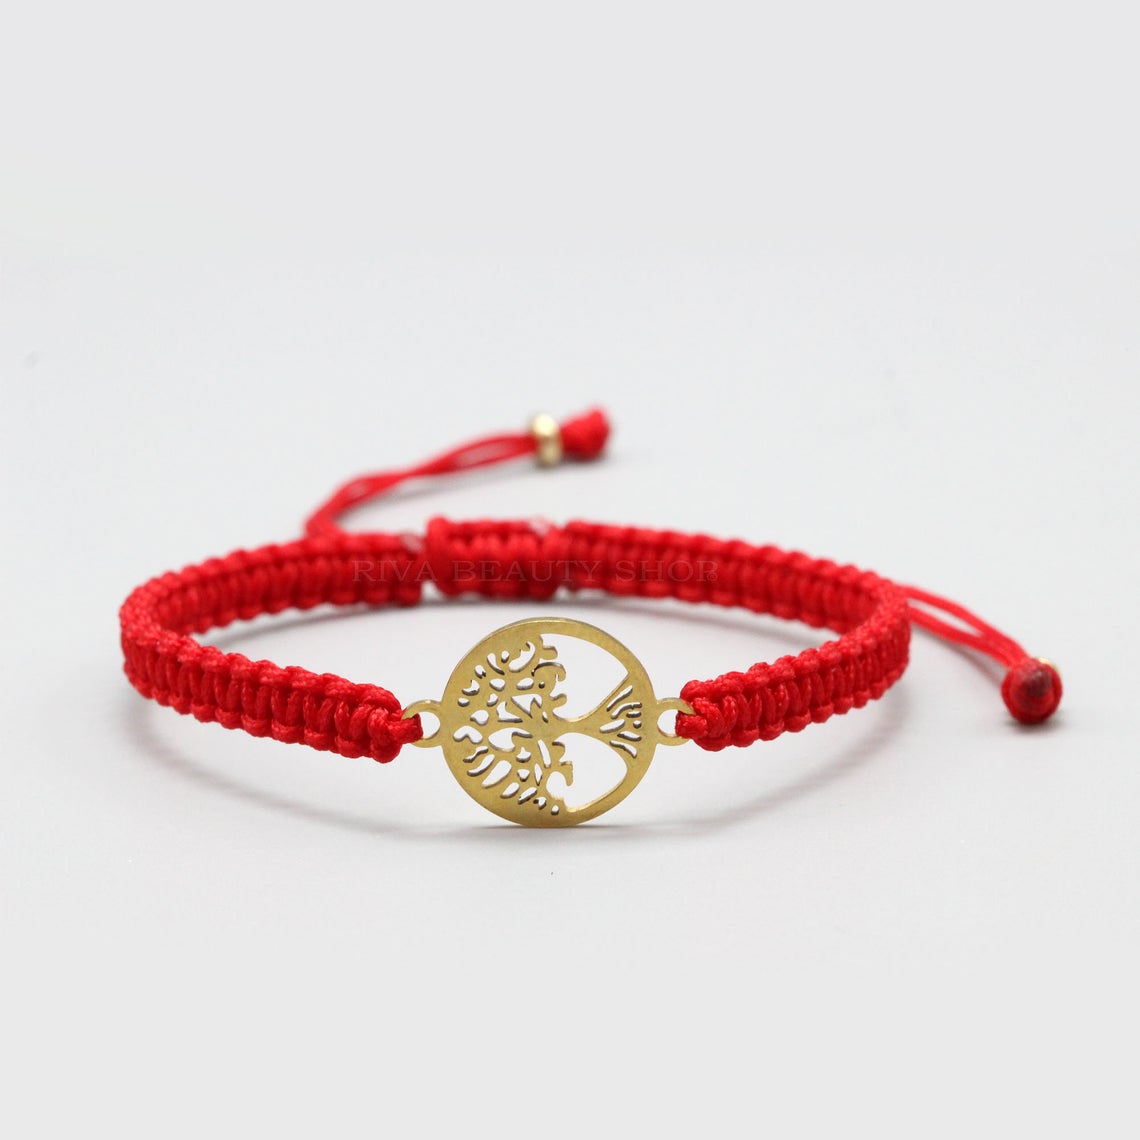 SOUL MATE, Bracelet Tibetan Buddhist knots of the luck